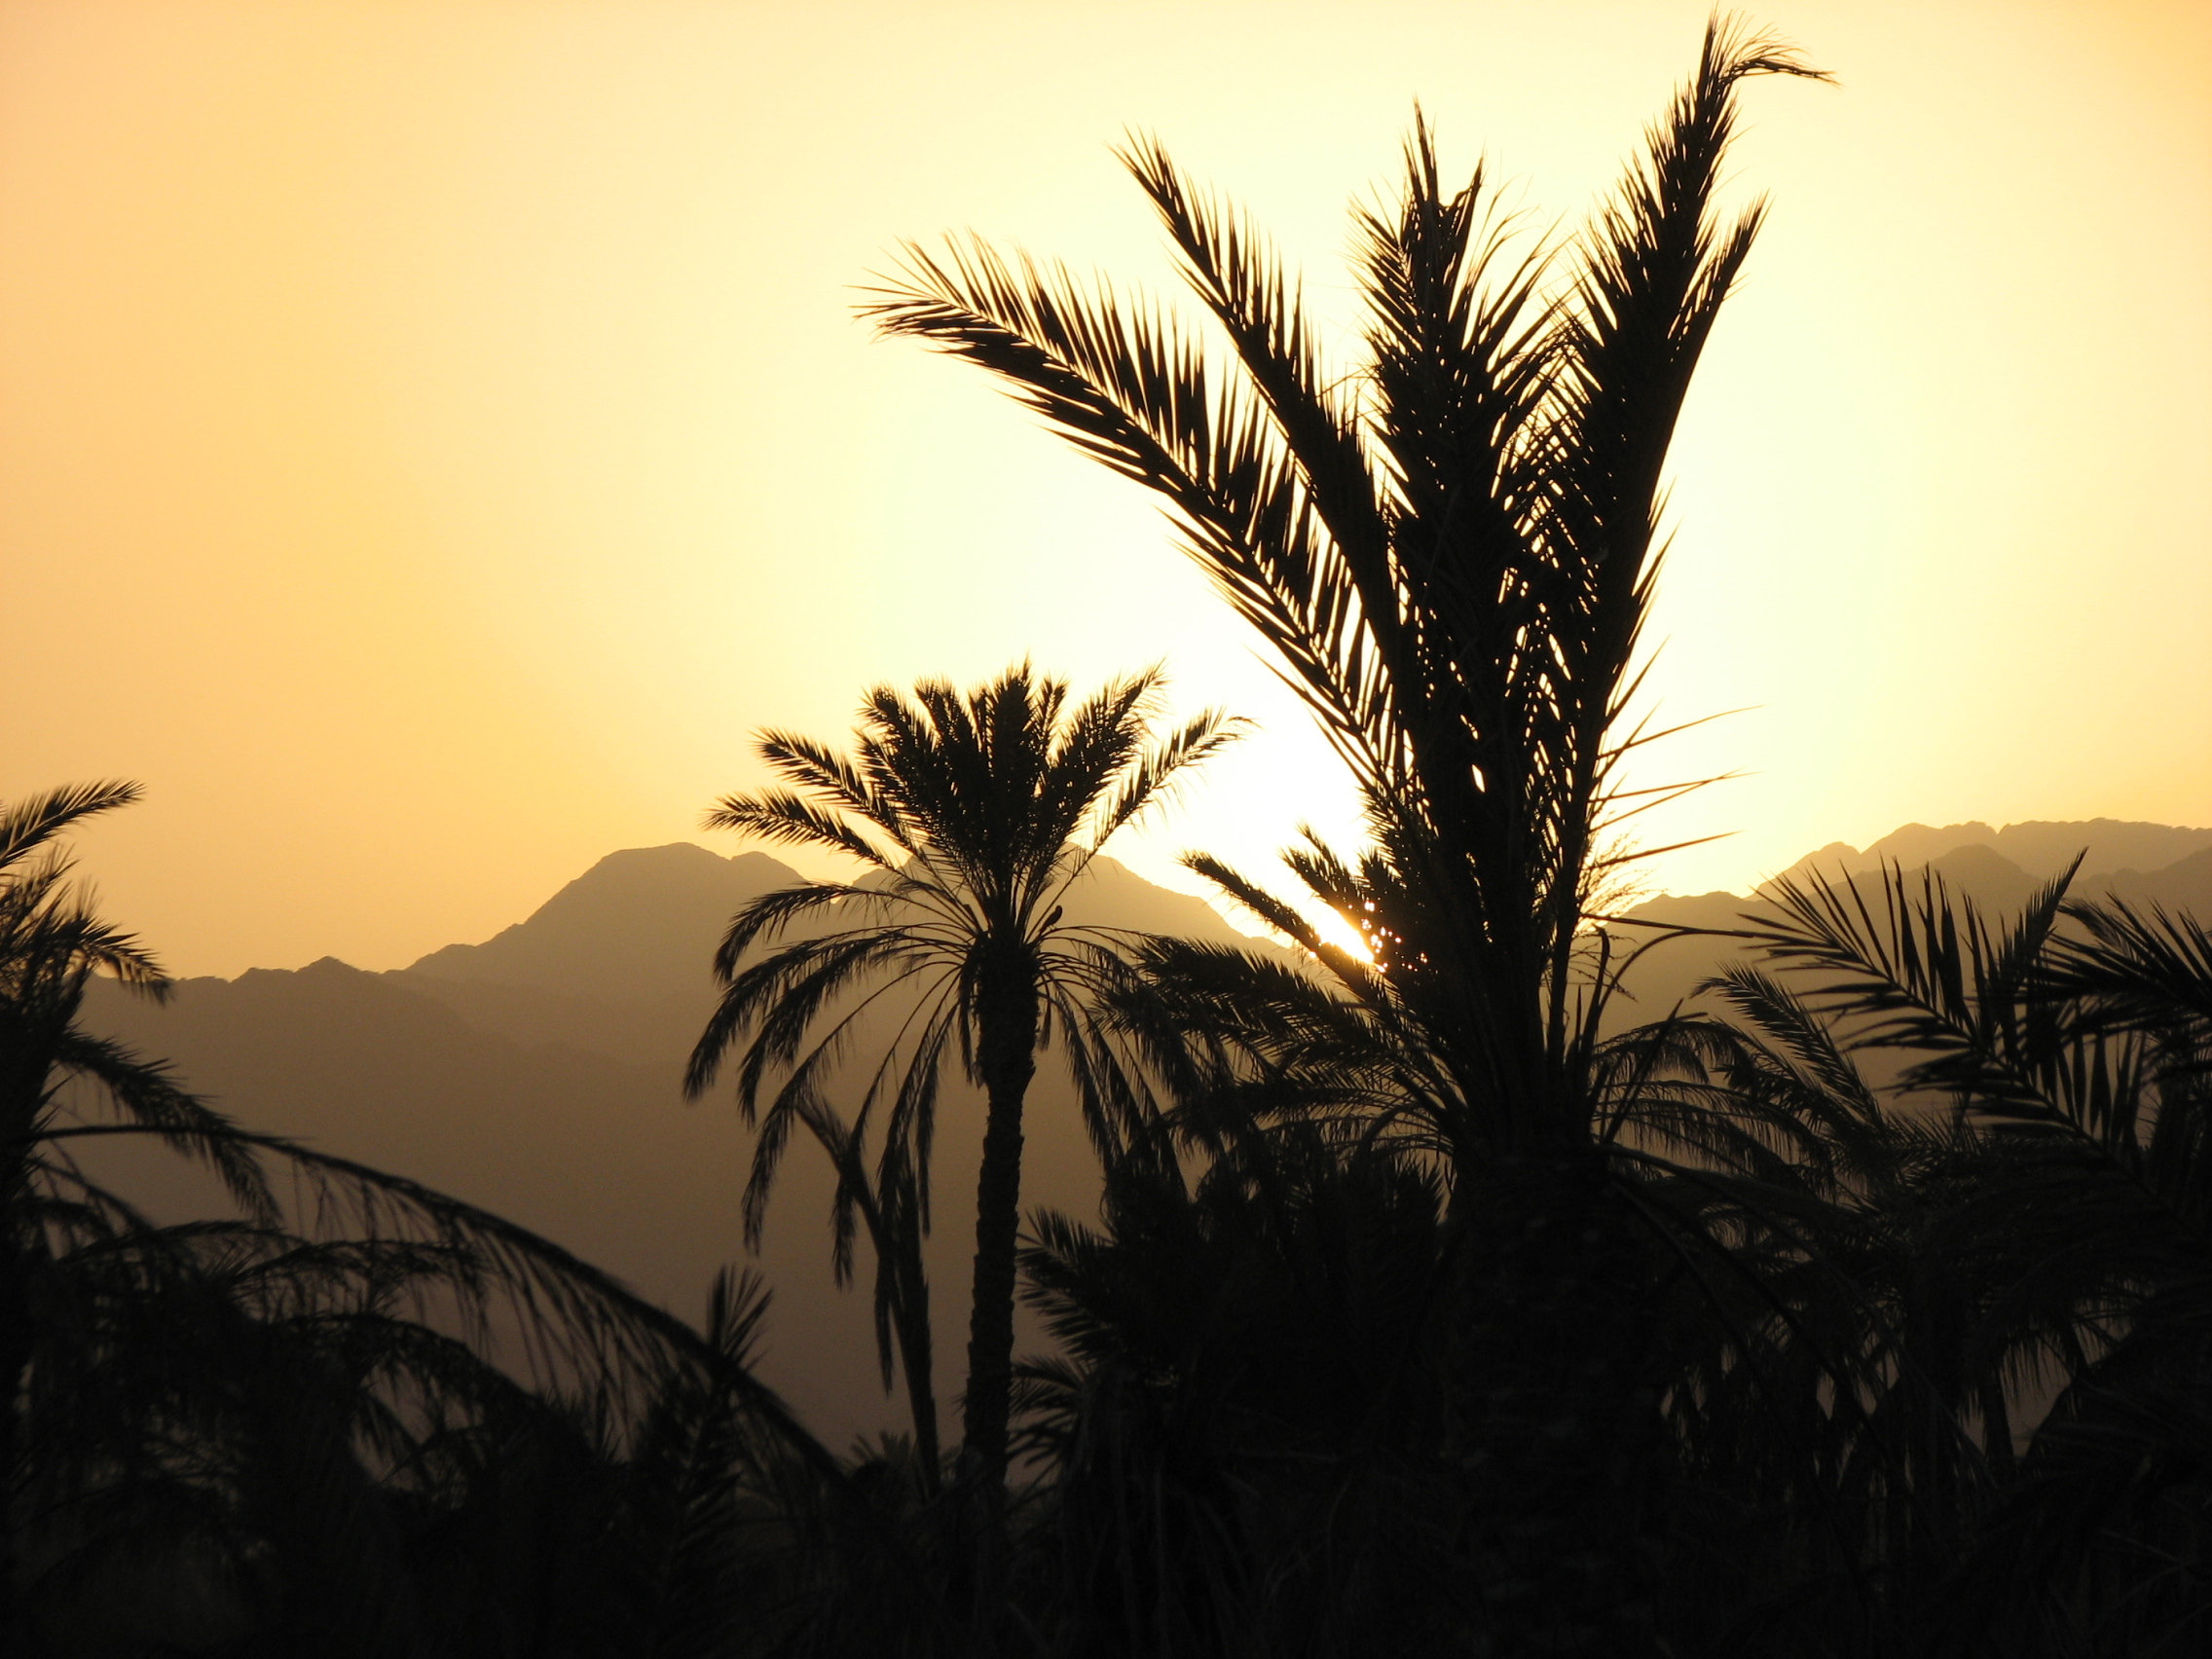 Sunset in fujairah photo